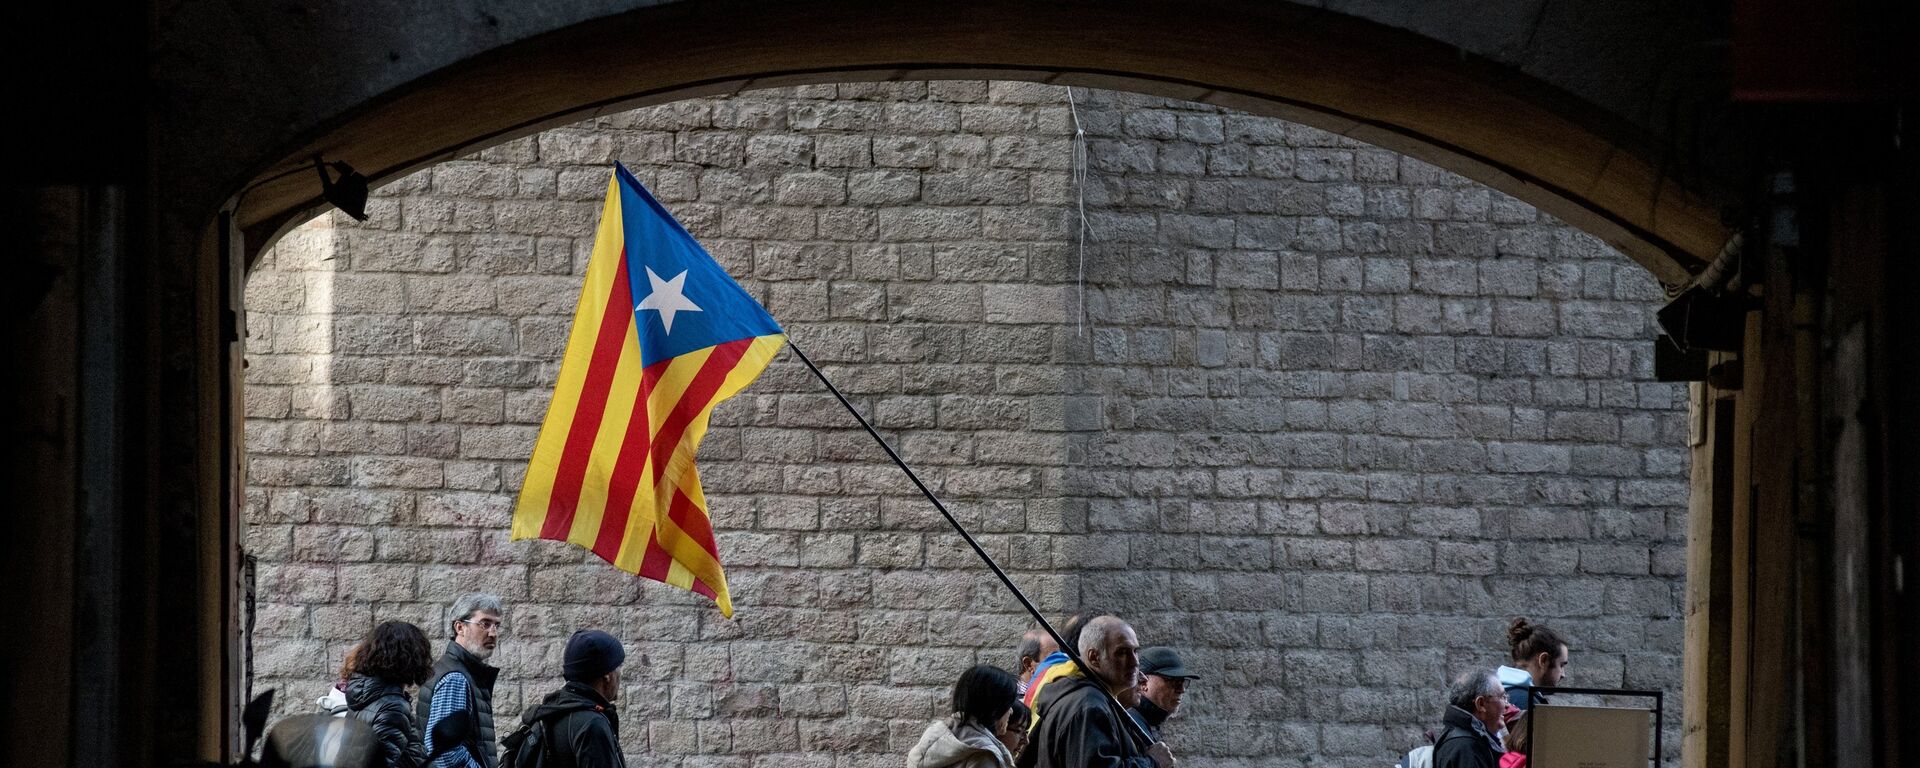 Manifestación independentista en Barcelona - Sputnik Mundo, 1920, 08.02.2021